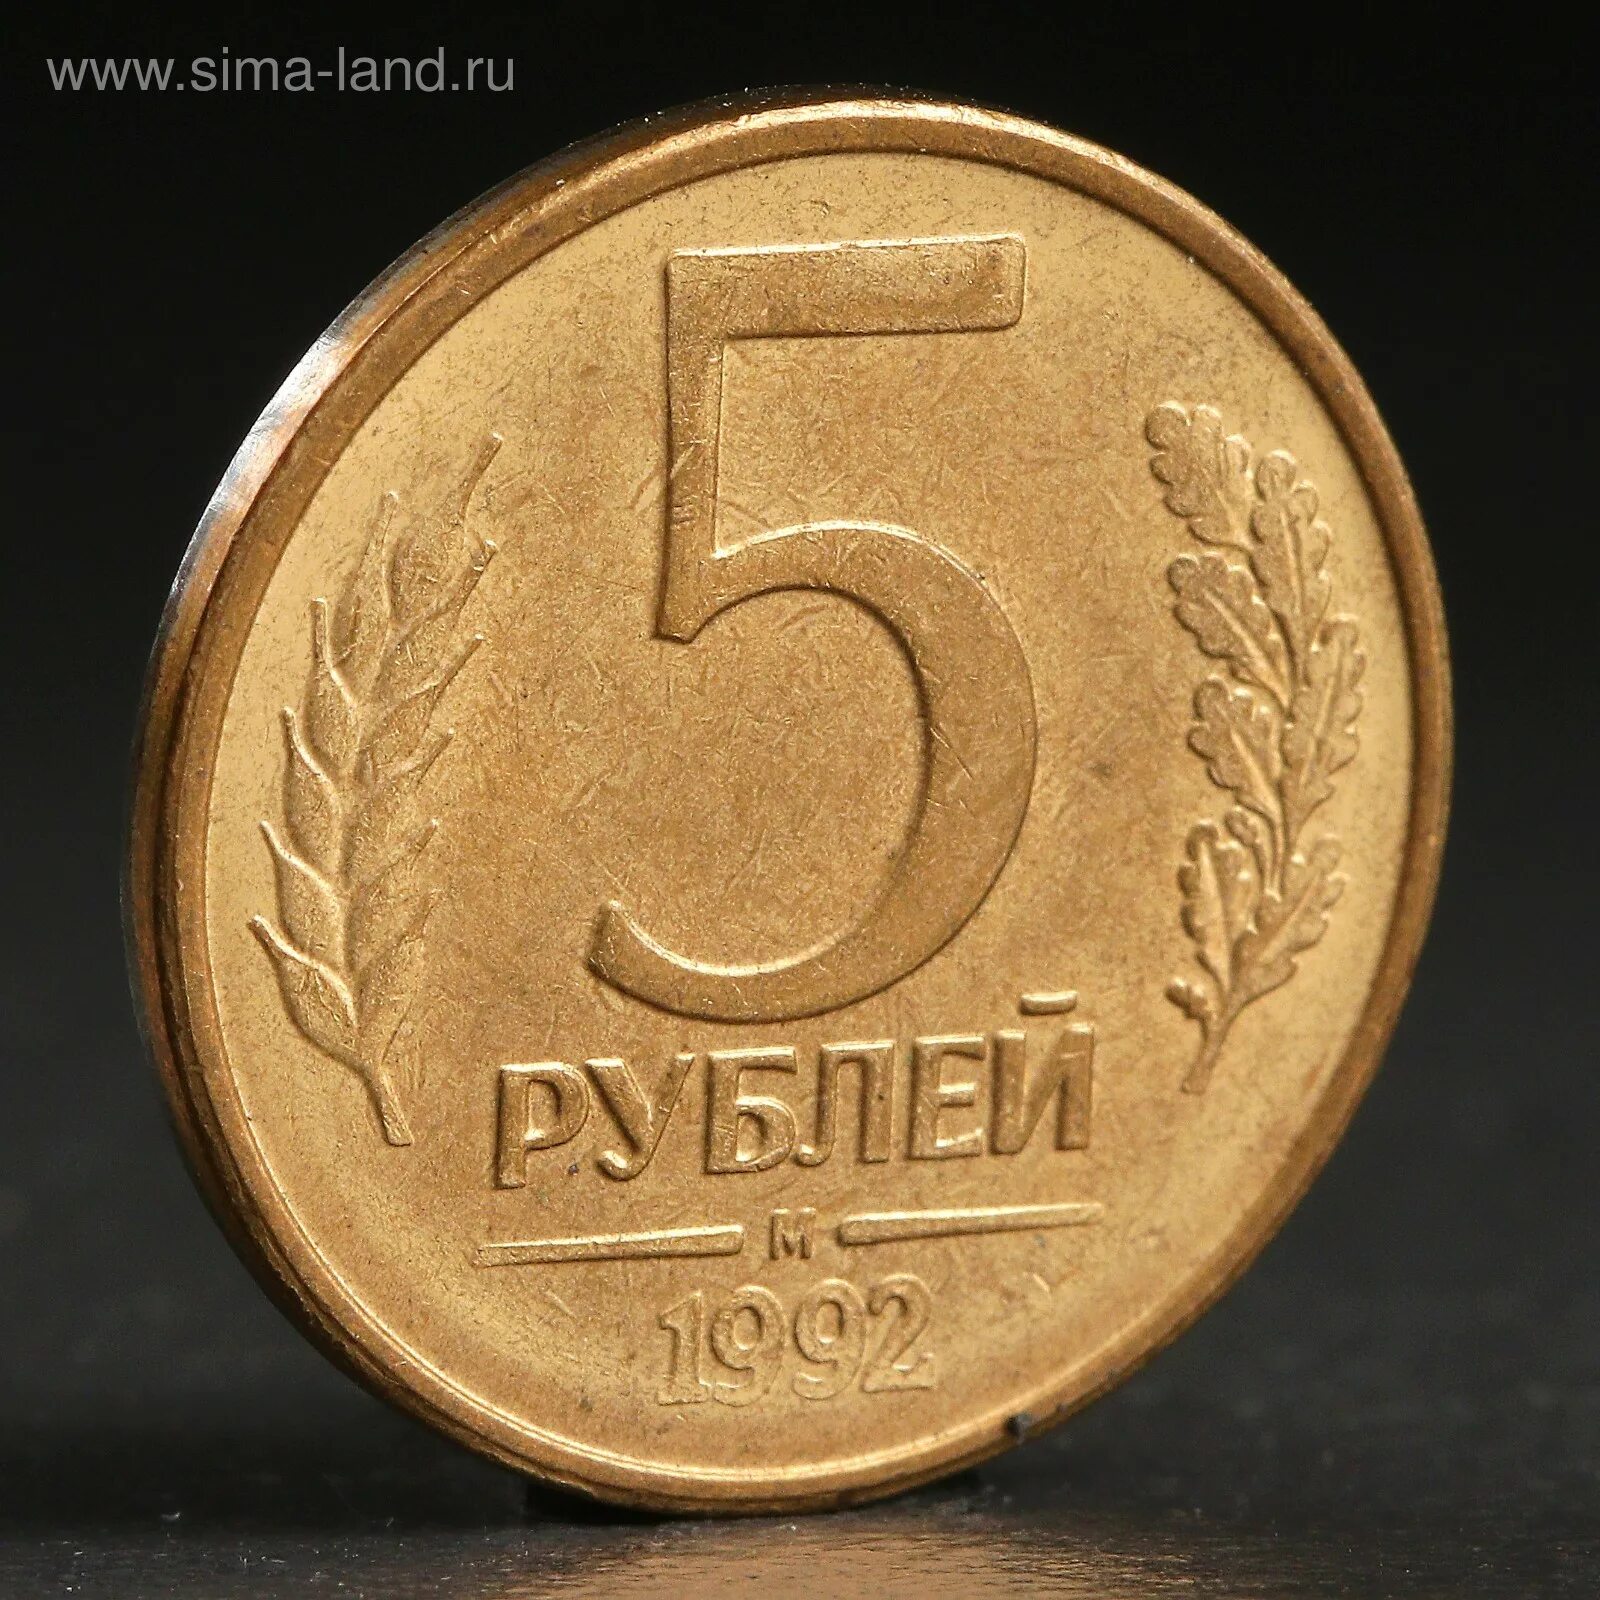 Монета 5 рублей года 1992 м. Монета 5 рублей 1992 л. Российская монета 5 рублей. Монета 5 рублей 1992